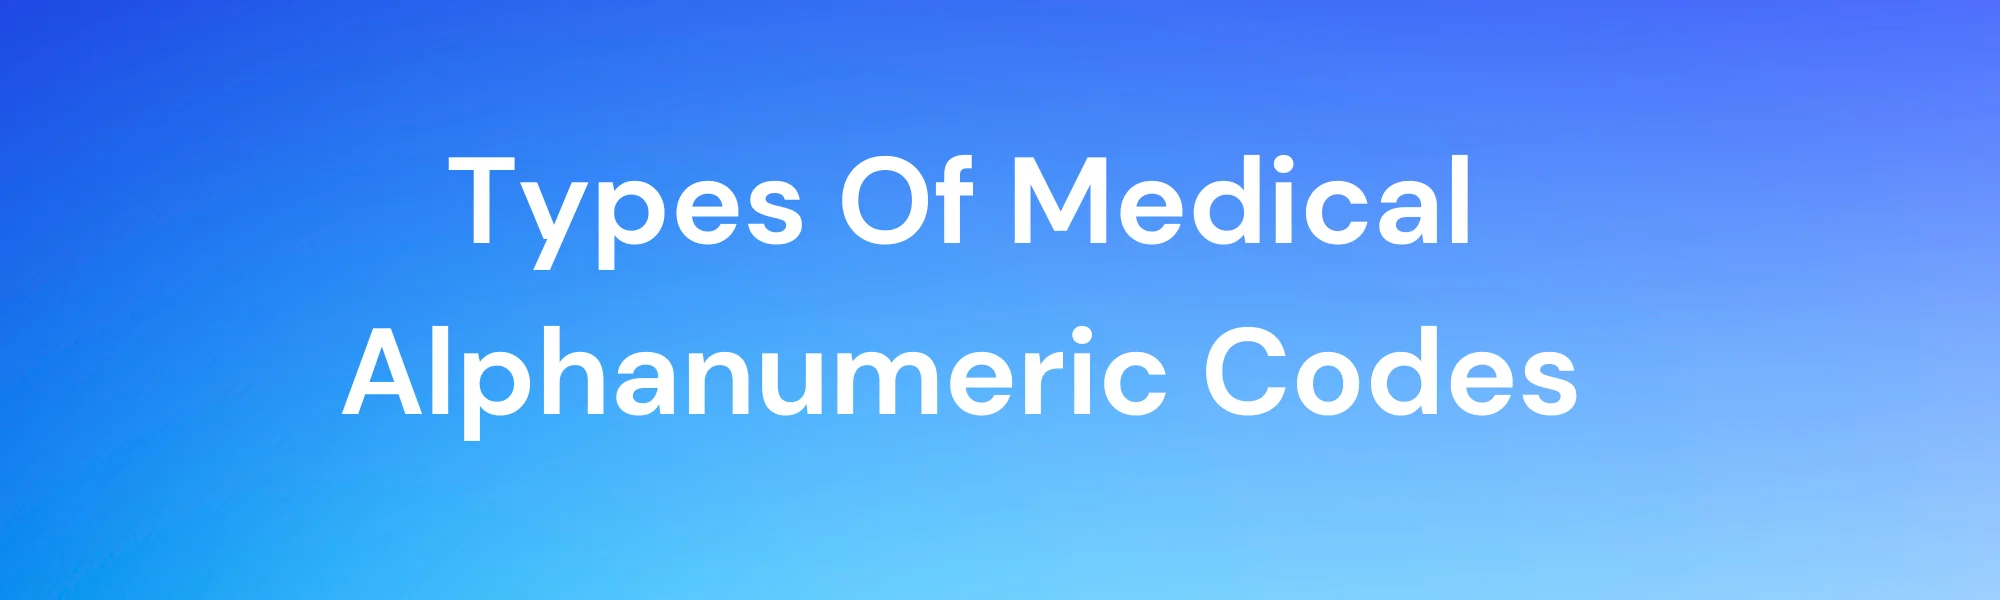 Types Of Medical Alphanumeric Codes